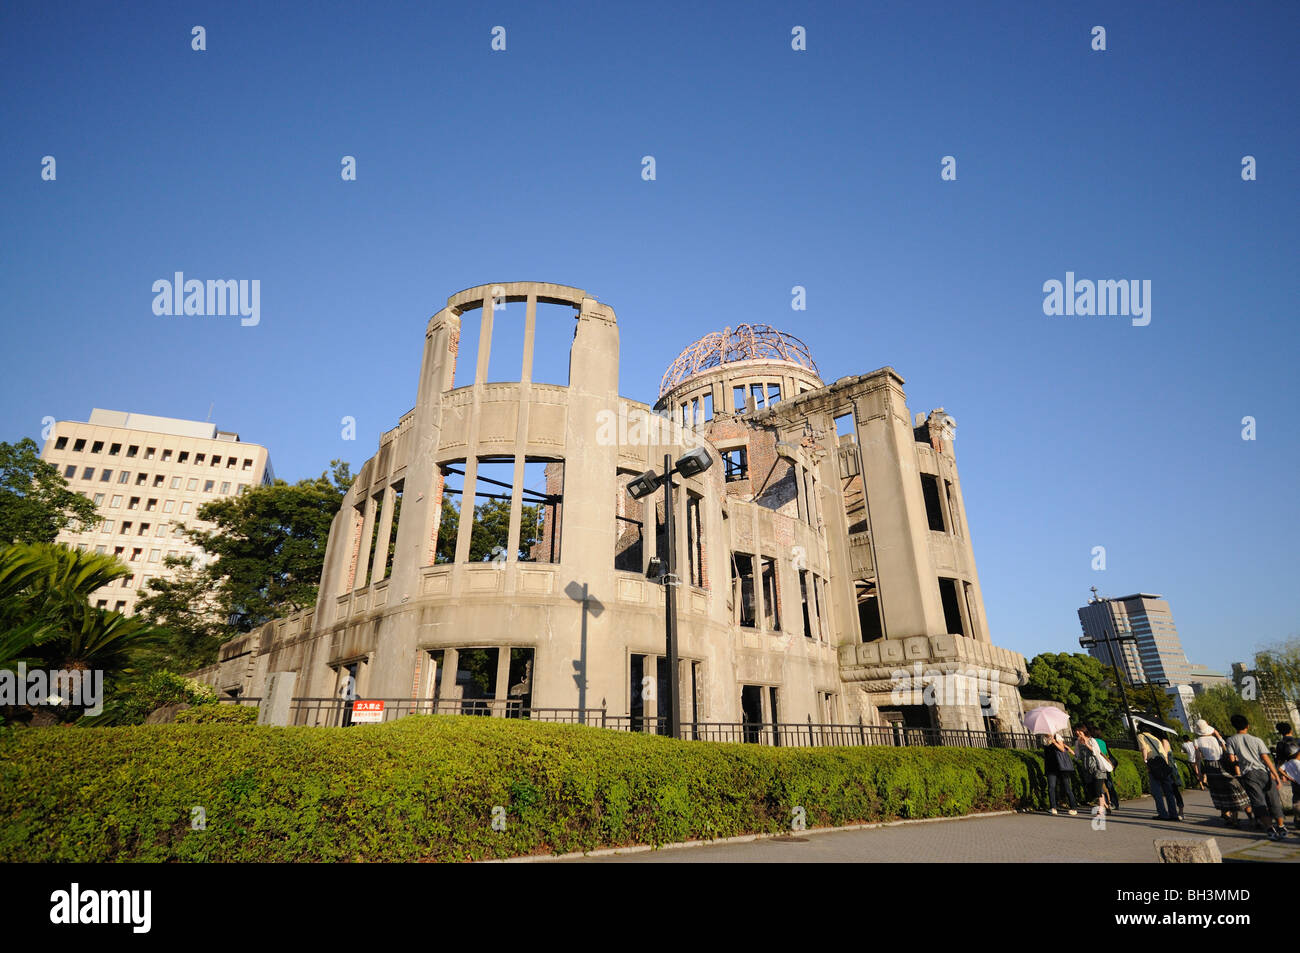 Genbaku Domu (Hiroshima Peace Memorial, aka the Atomic Bomb Dome or A-Bomb Dome). Hiroshima. Japan Stock Photo